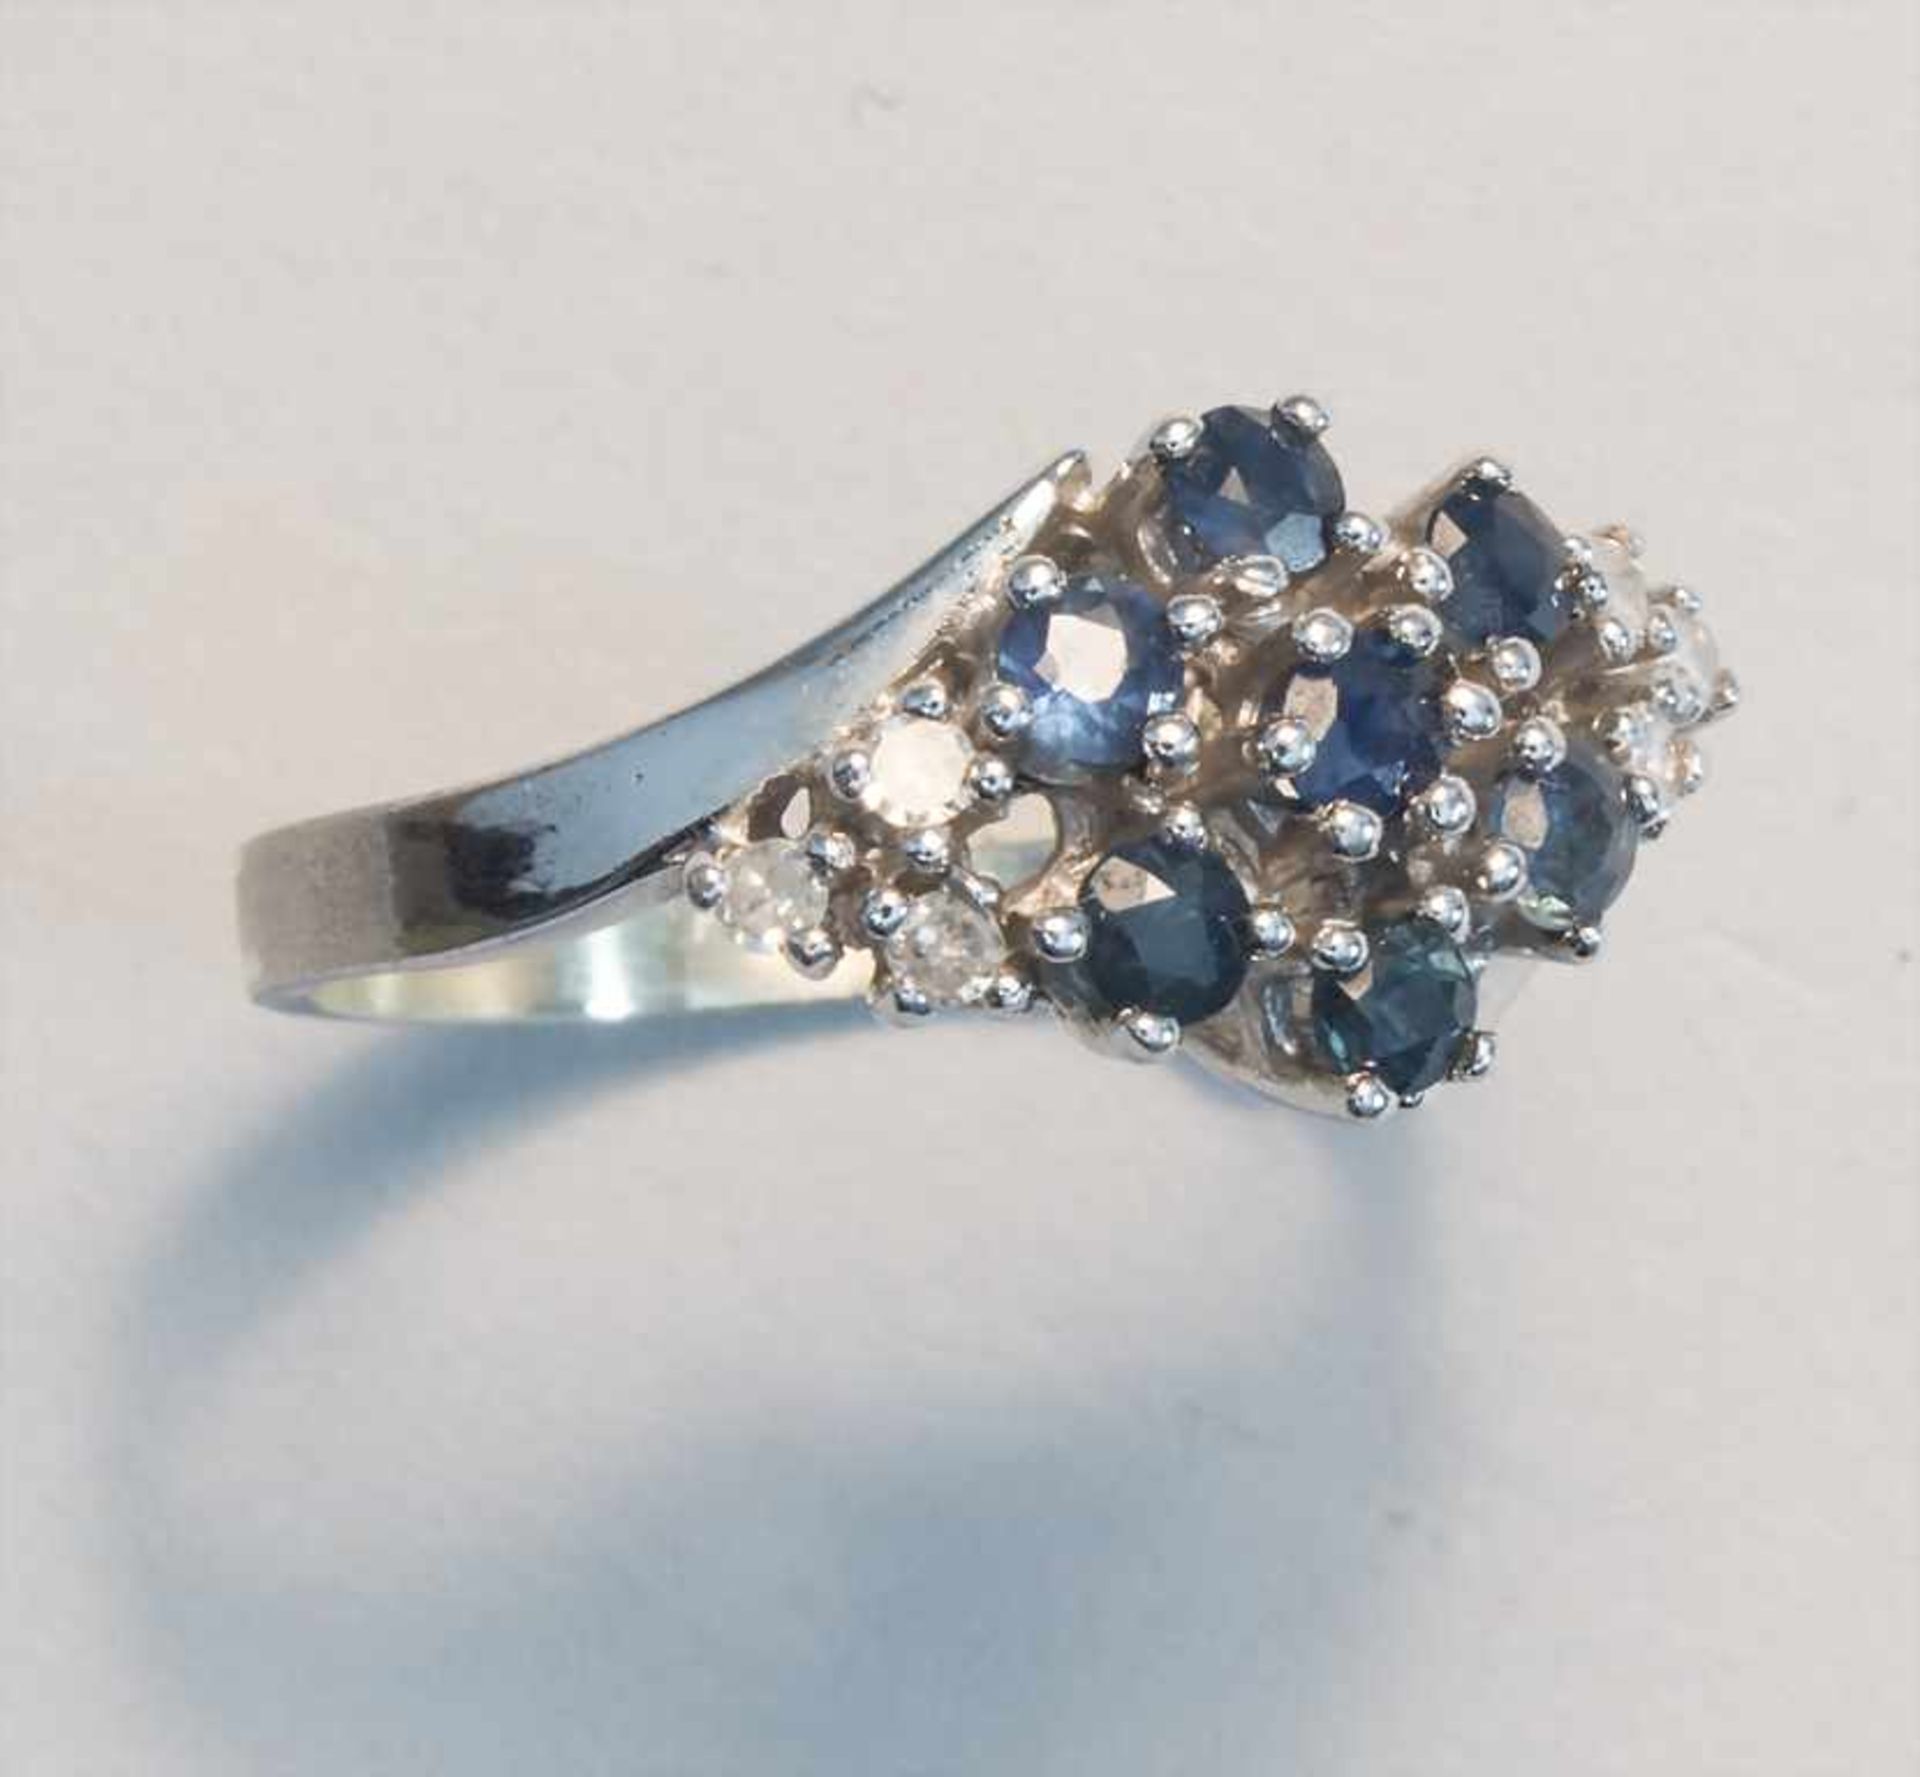 Damenring mit Diamanten und Saphiren / A ladies ring with diamonds and sapphires - Image 2 of 4